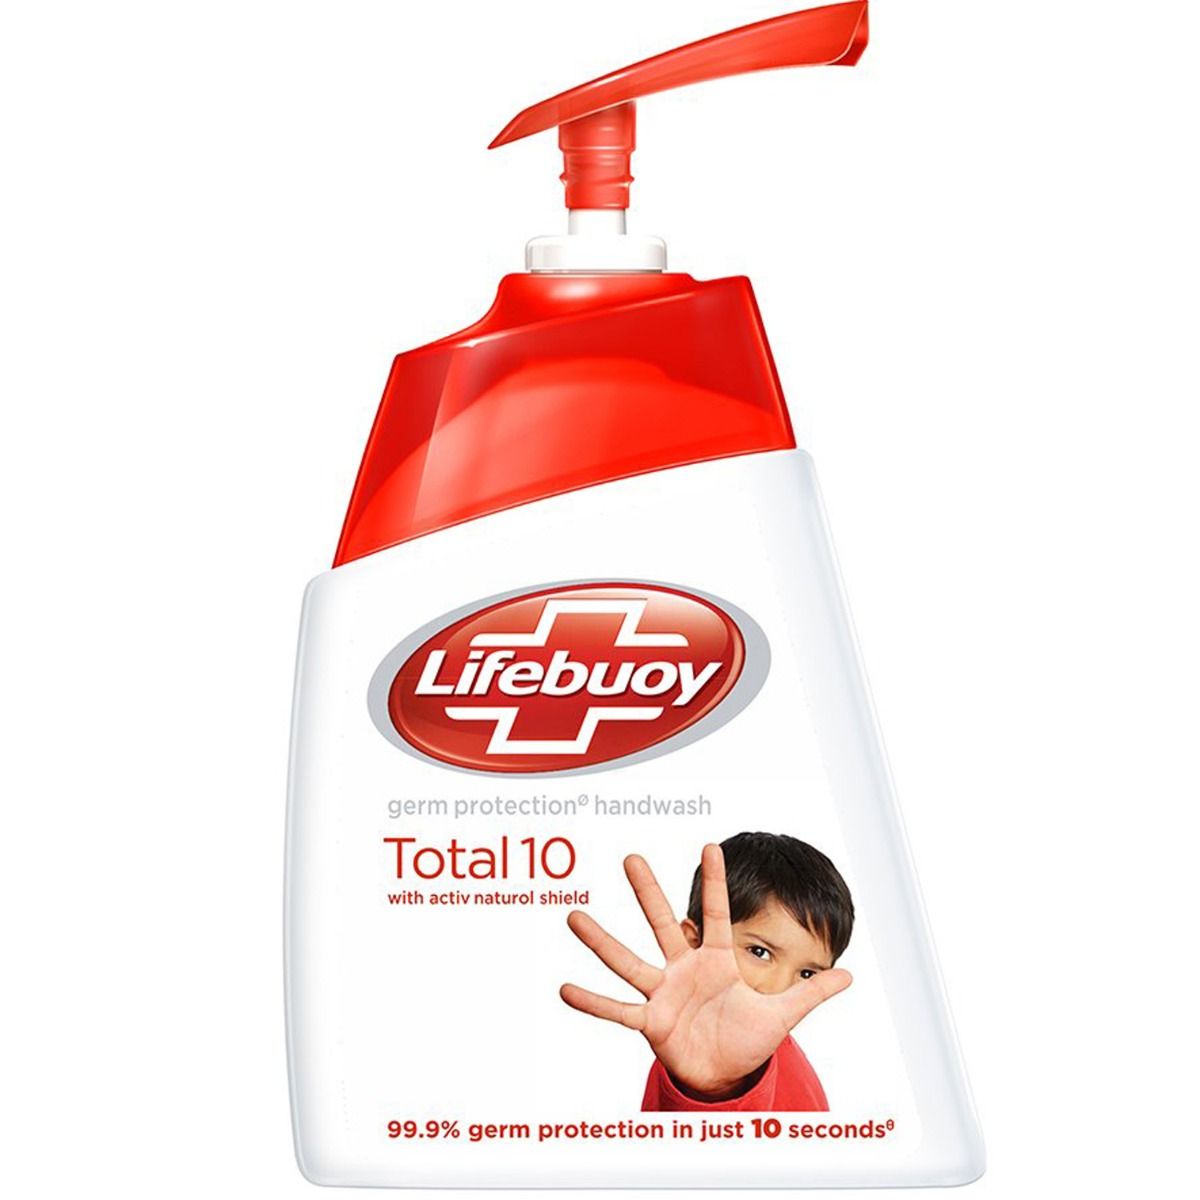 Buy Lifebuoy Total 10 Activ Naturol Shield Germ Protection Handwash, 580 ml Pump Bottle Online